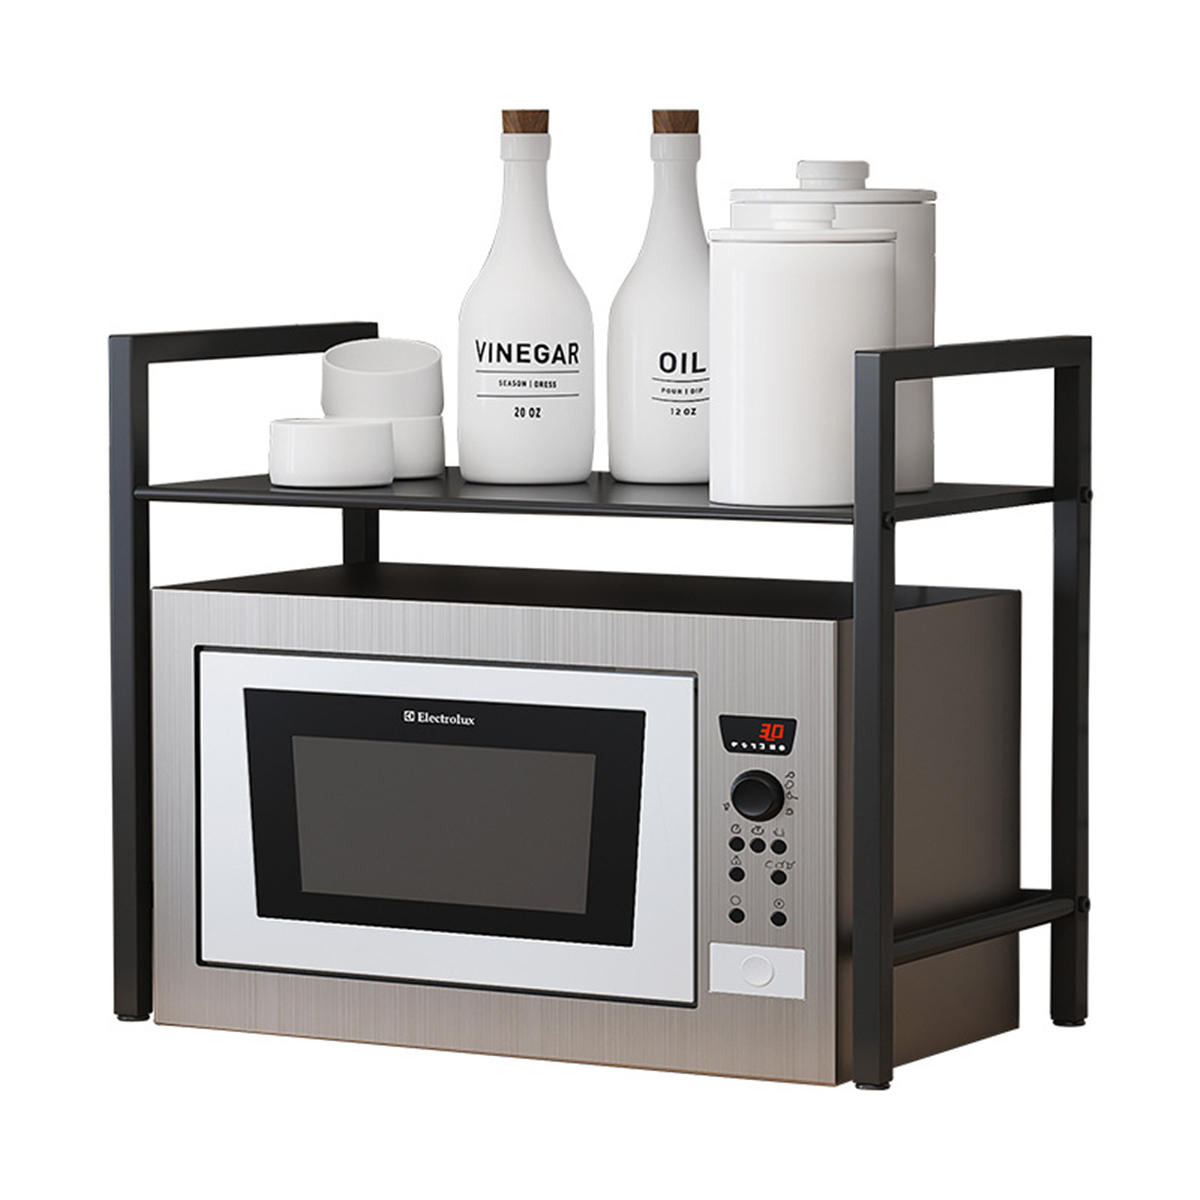 

Metal Microwave Oven Stand Rack Stand Shelf Kitchen Tableware Storage Organizer Holder for Kitchen Bedroom Bathroom